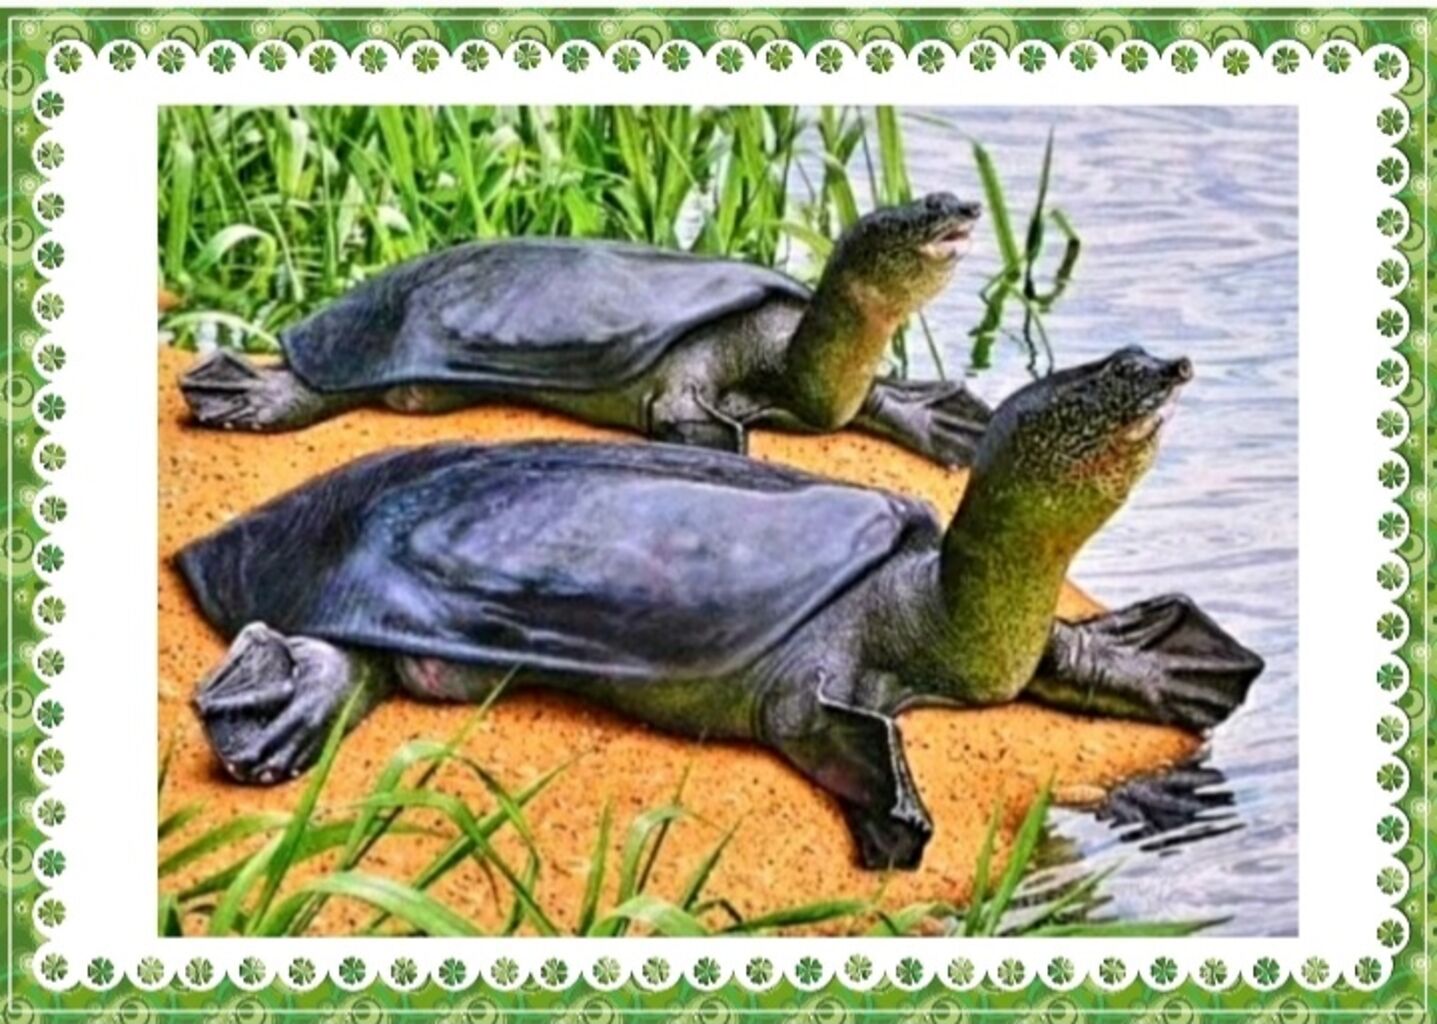 Гигантская мягкотелая черепаха реки Янцзы